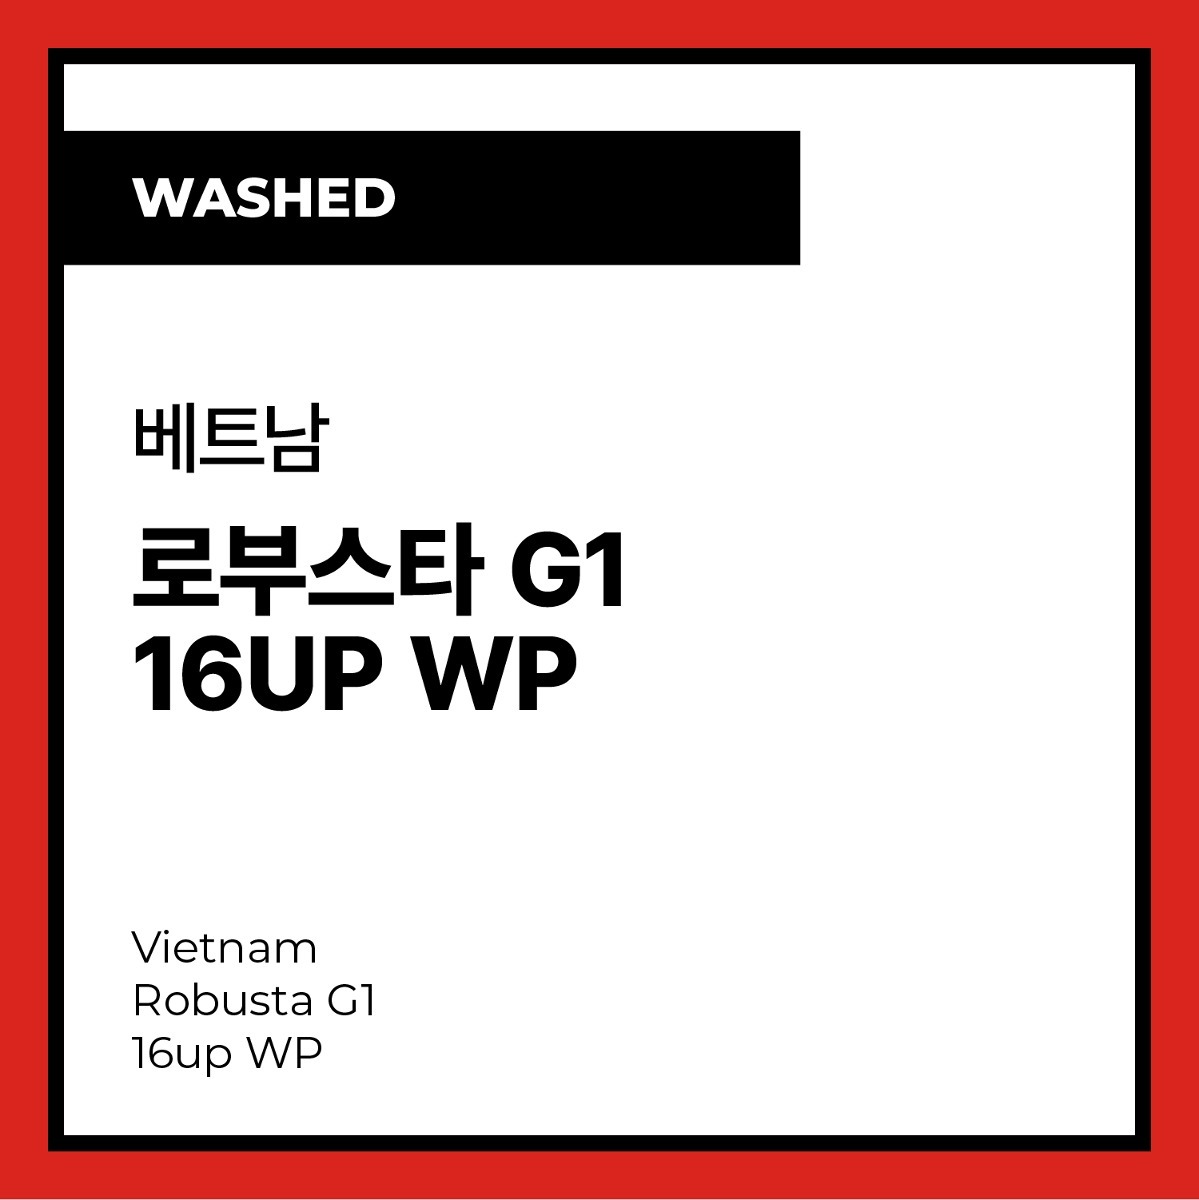 Vietnam Robusta G1 16up WP (Washed) 베트남 로부스타 G1 16up WP (워시드)